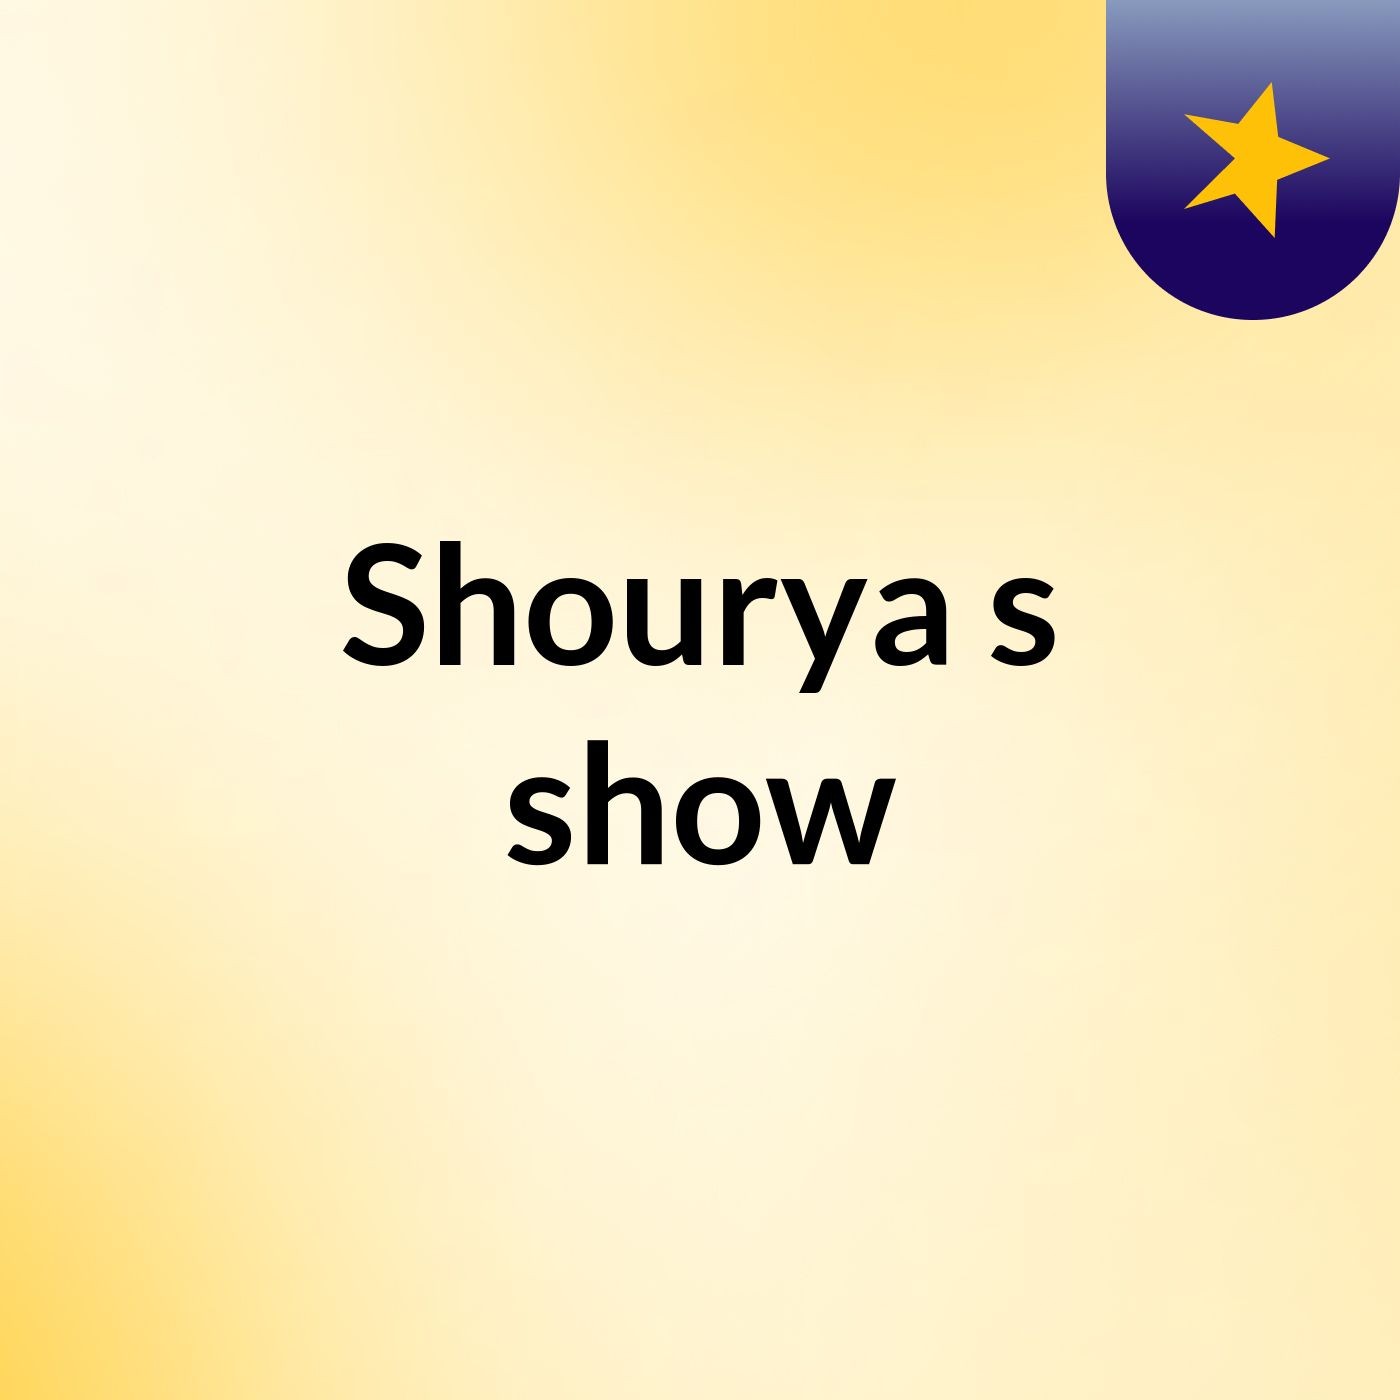 Shourya's show